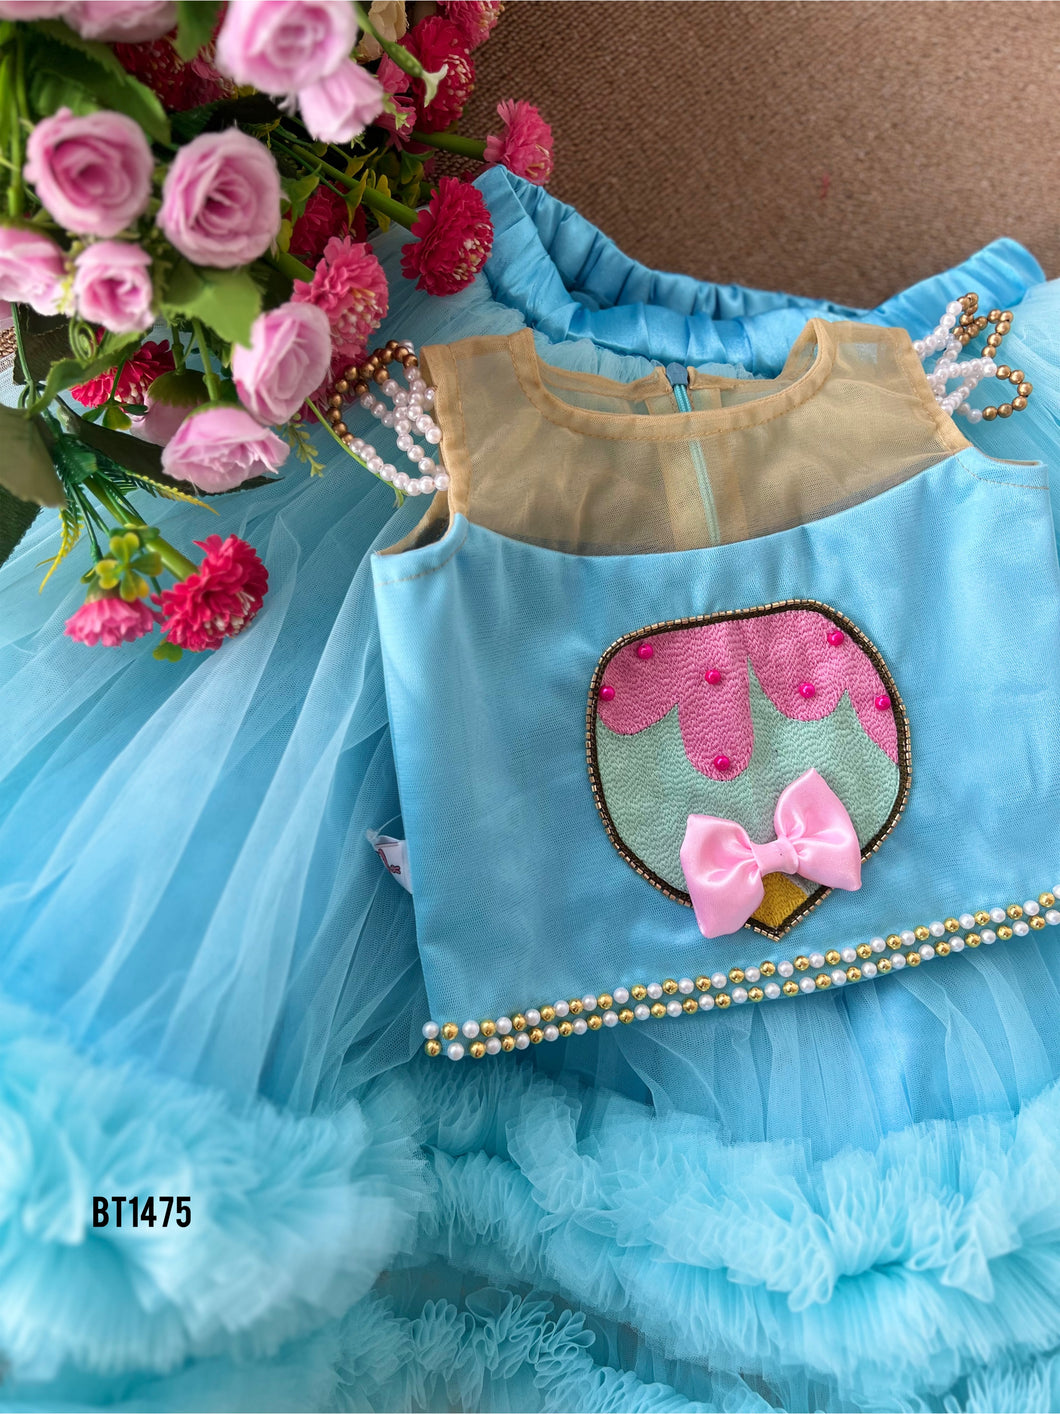 BT1475 Charming Aqua Ice Cream Dress - Sweet Celebrations Await!